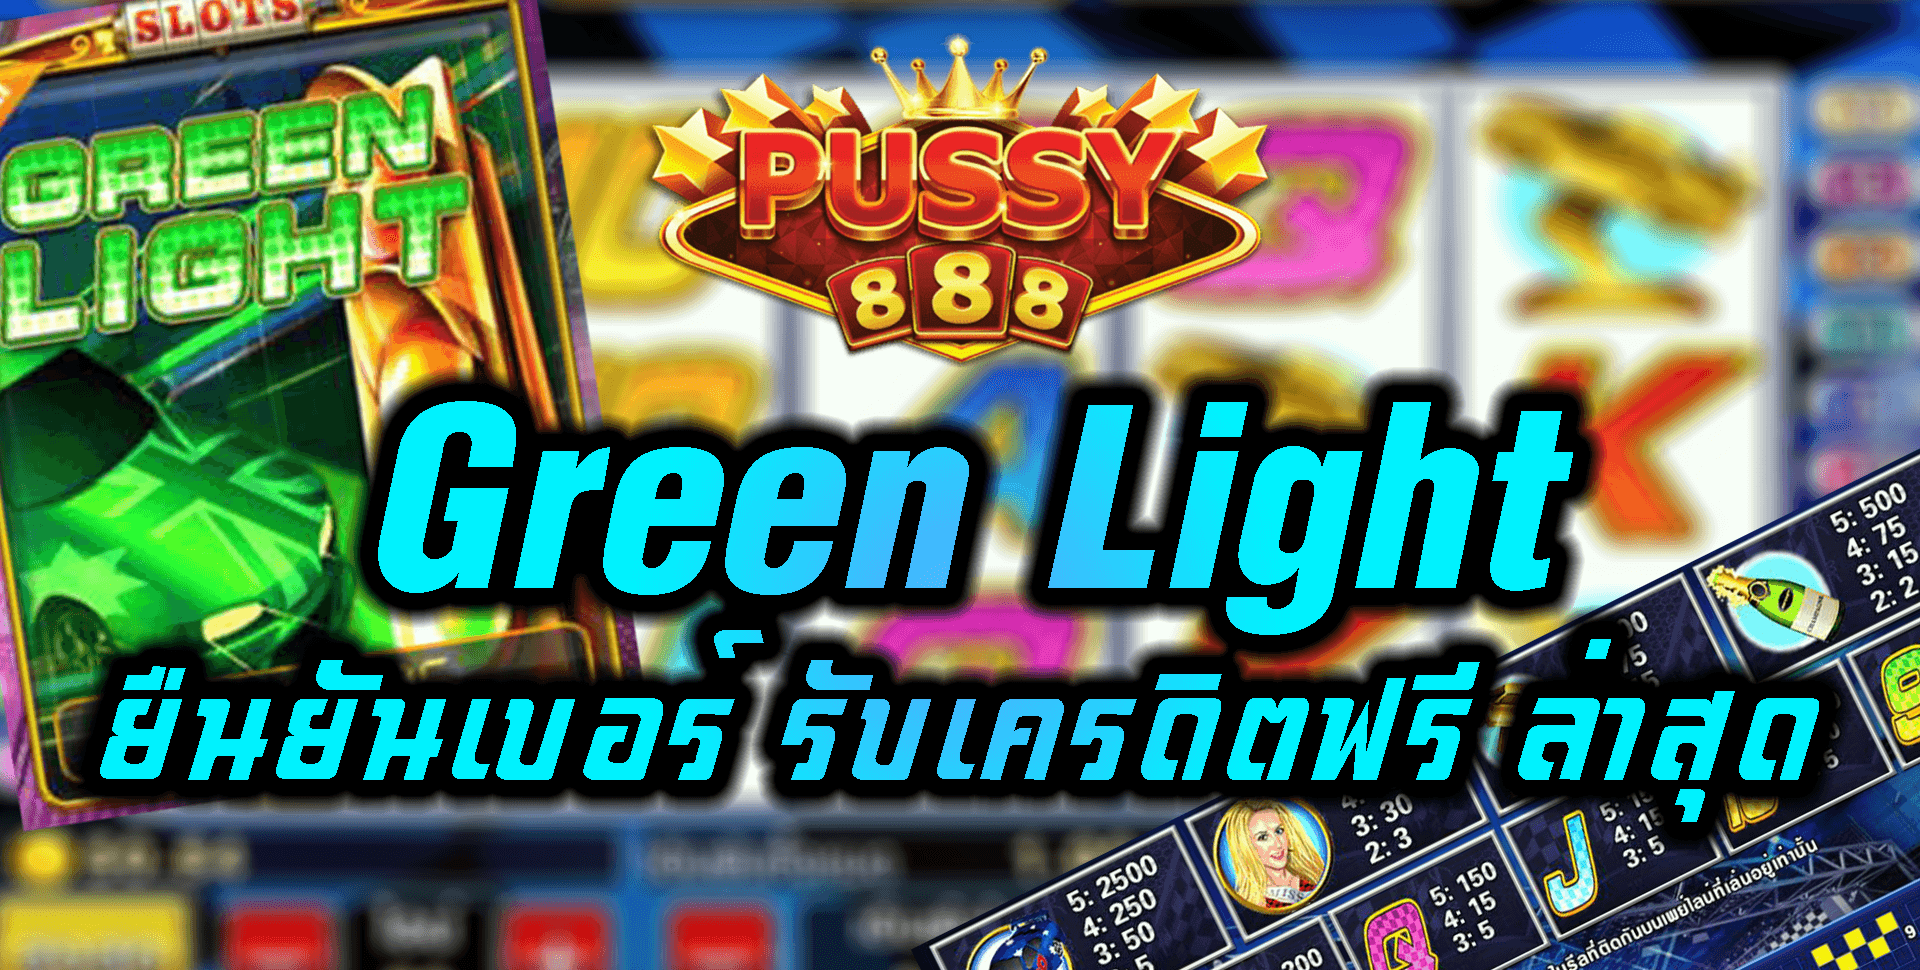 pussy888-Green Light-5